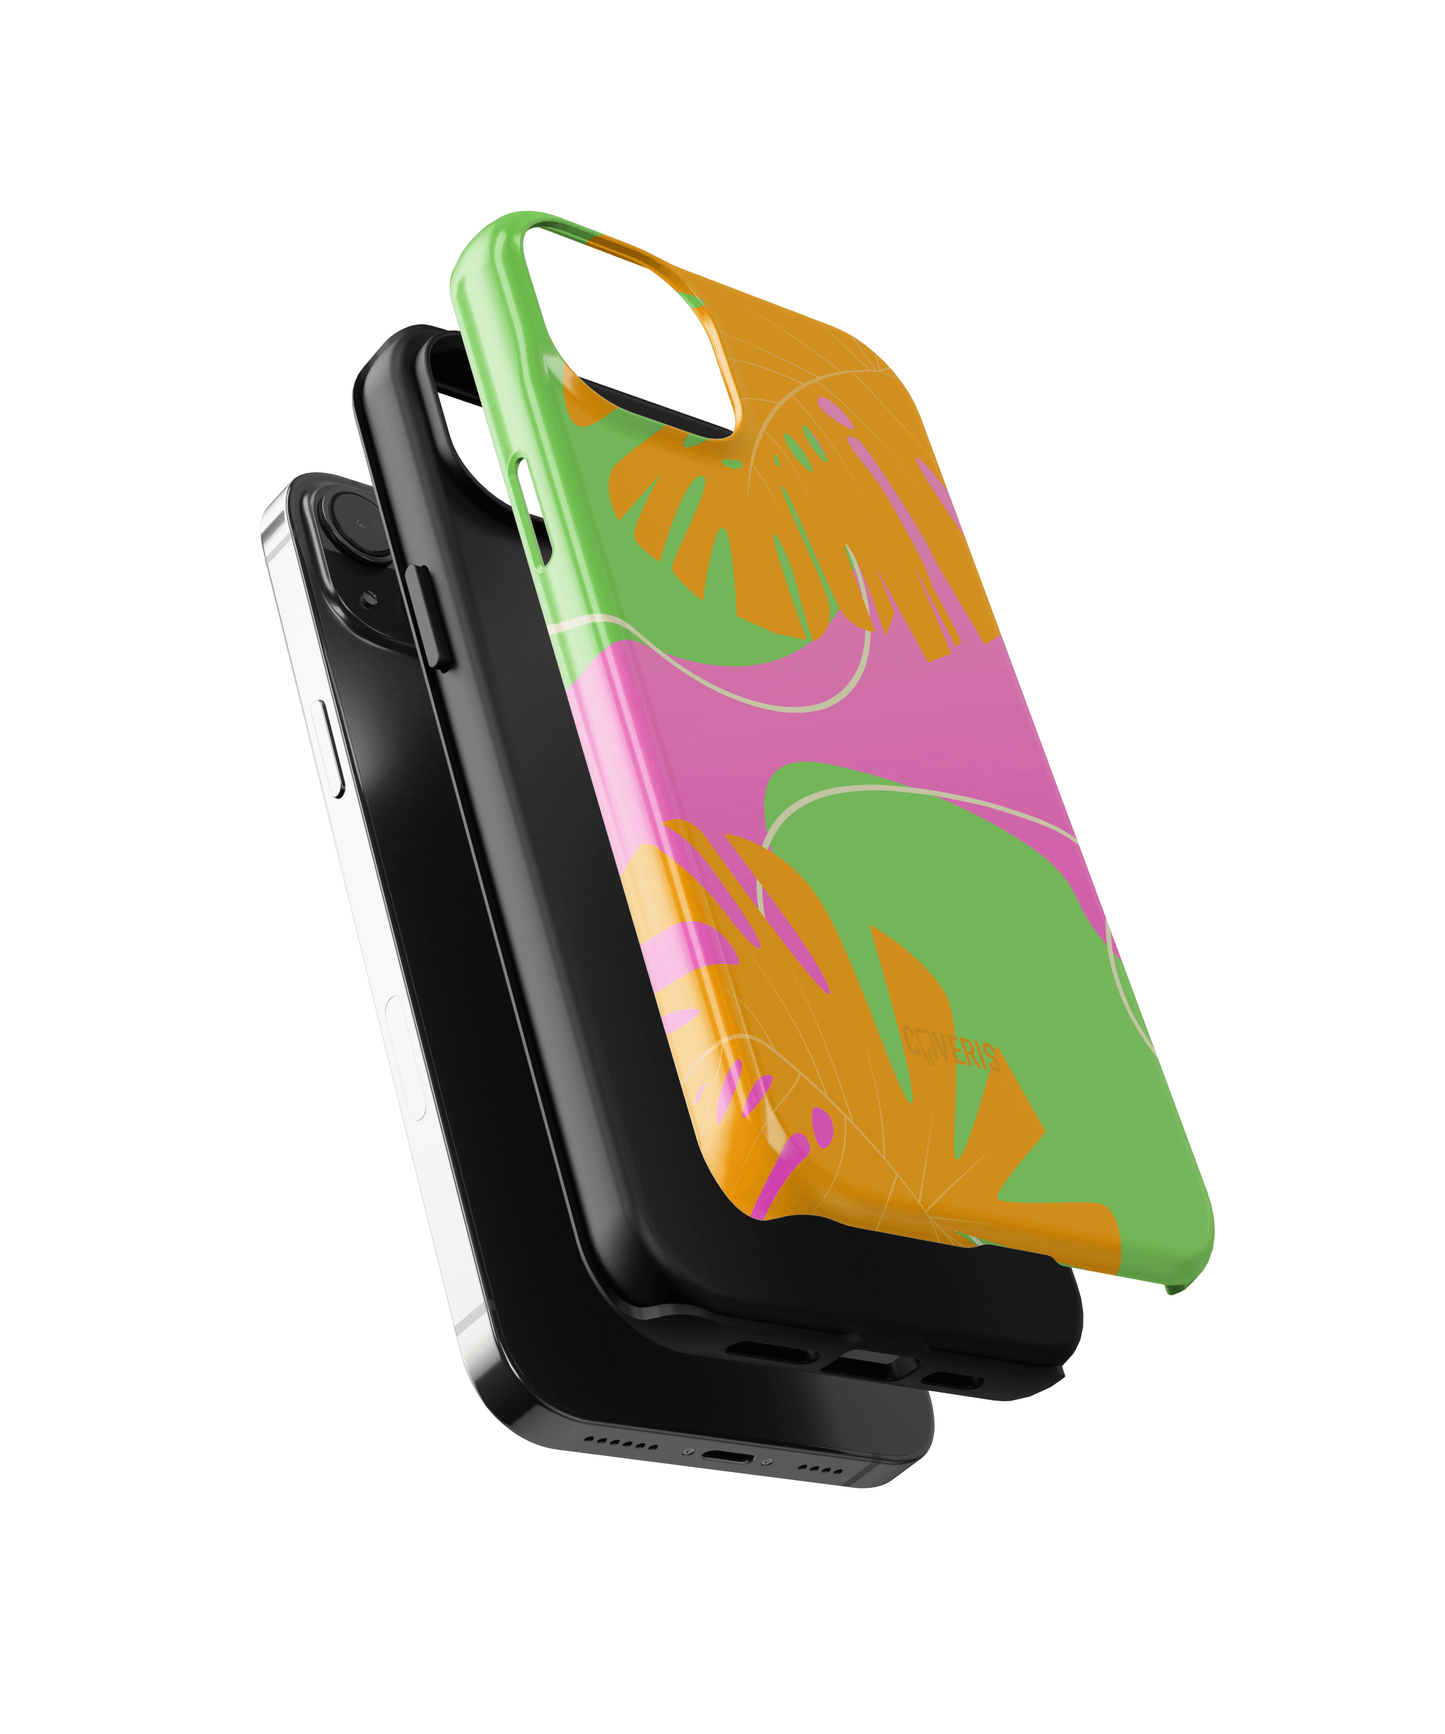 Neonpalms - Google Pixel 2 XL phone case